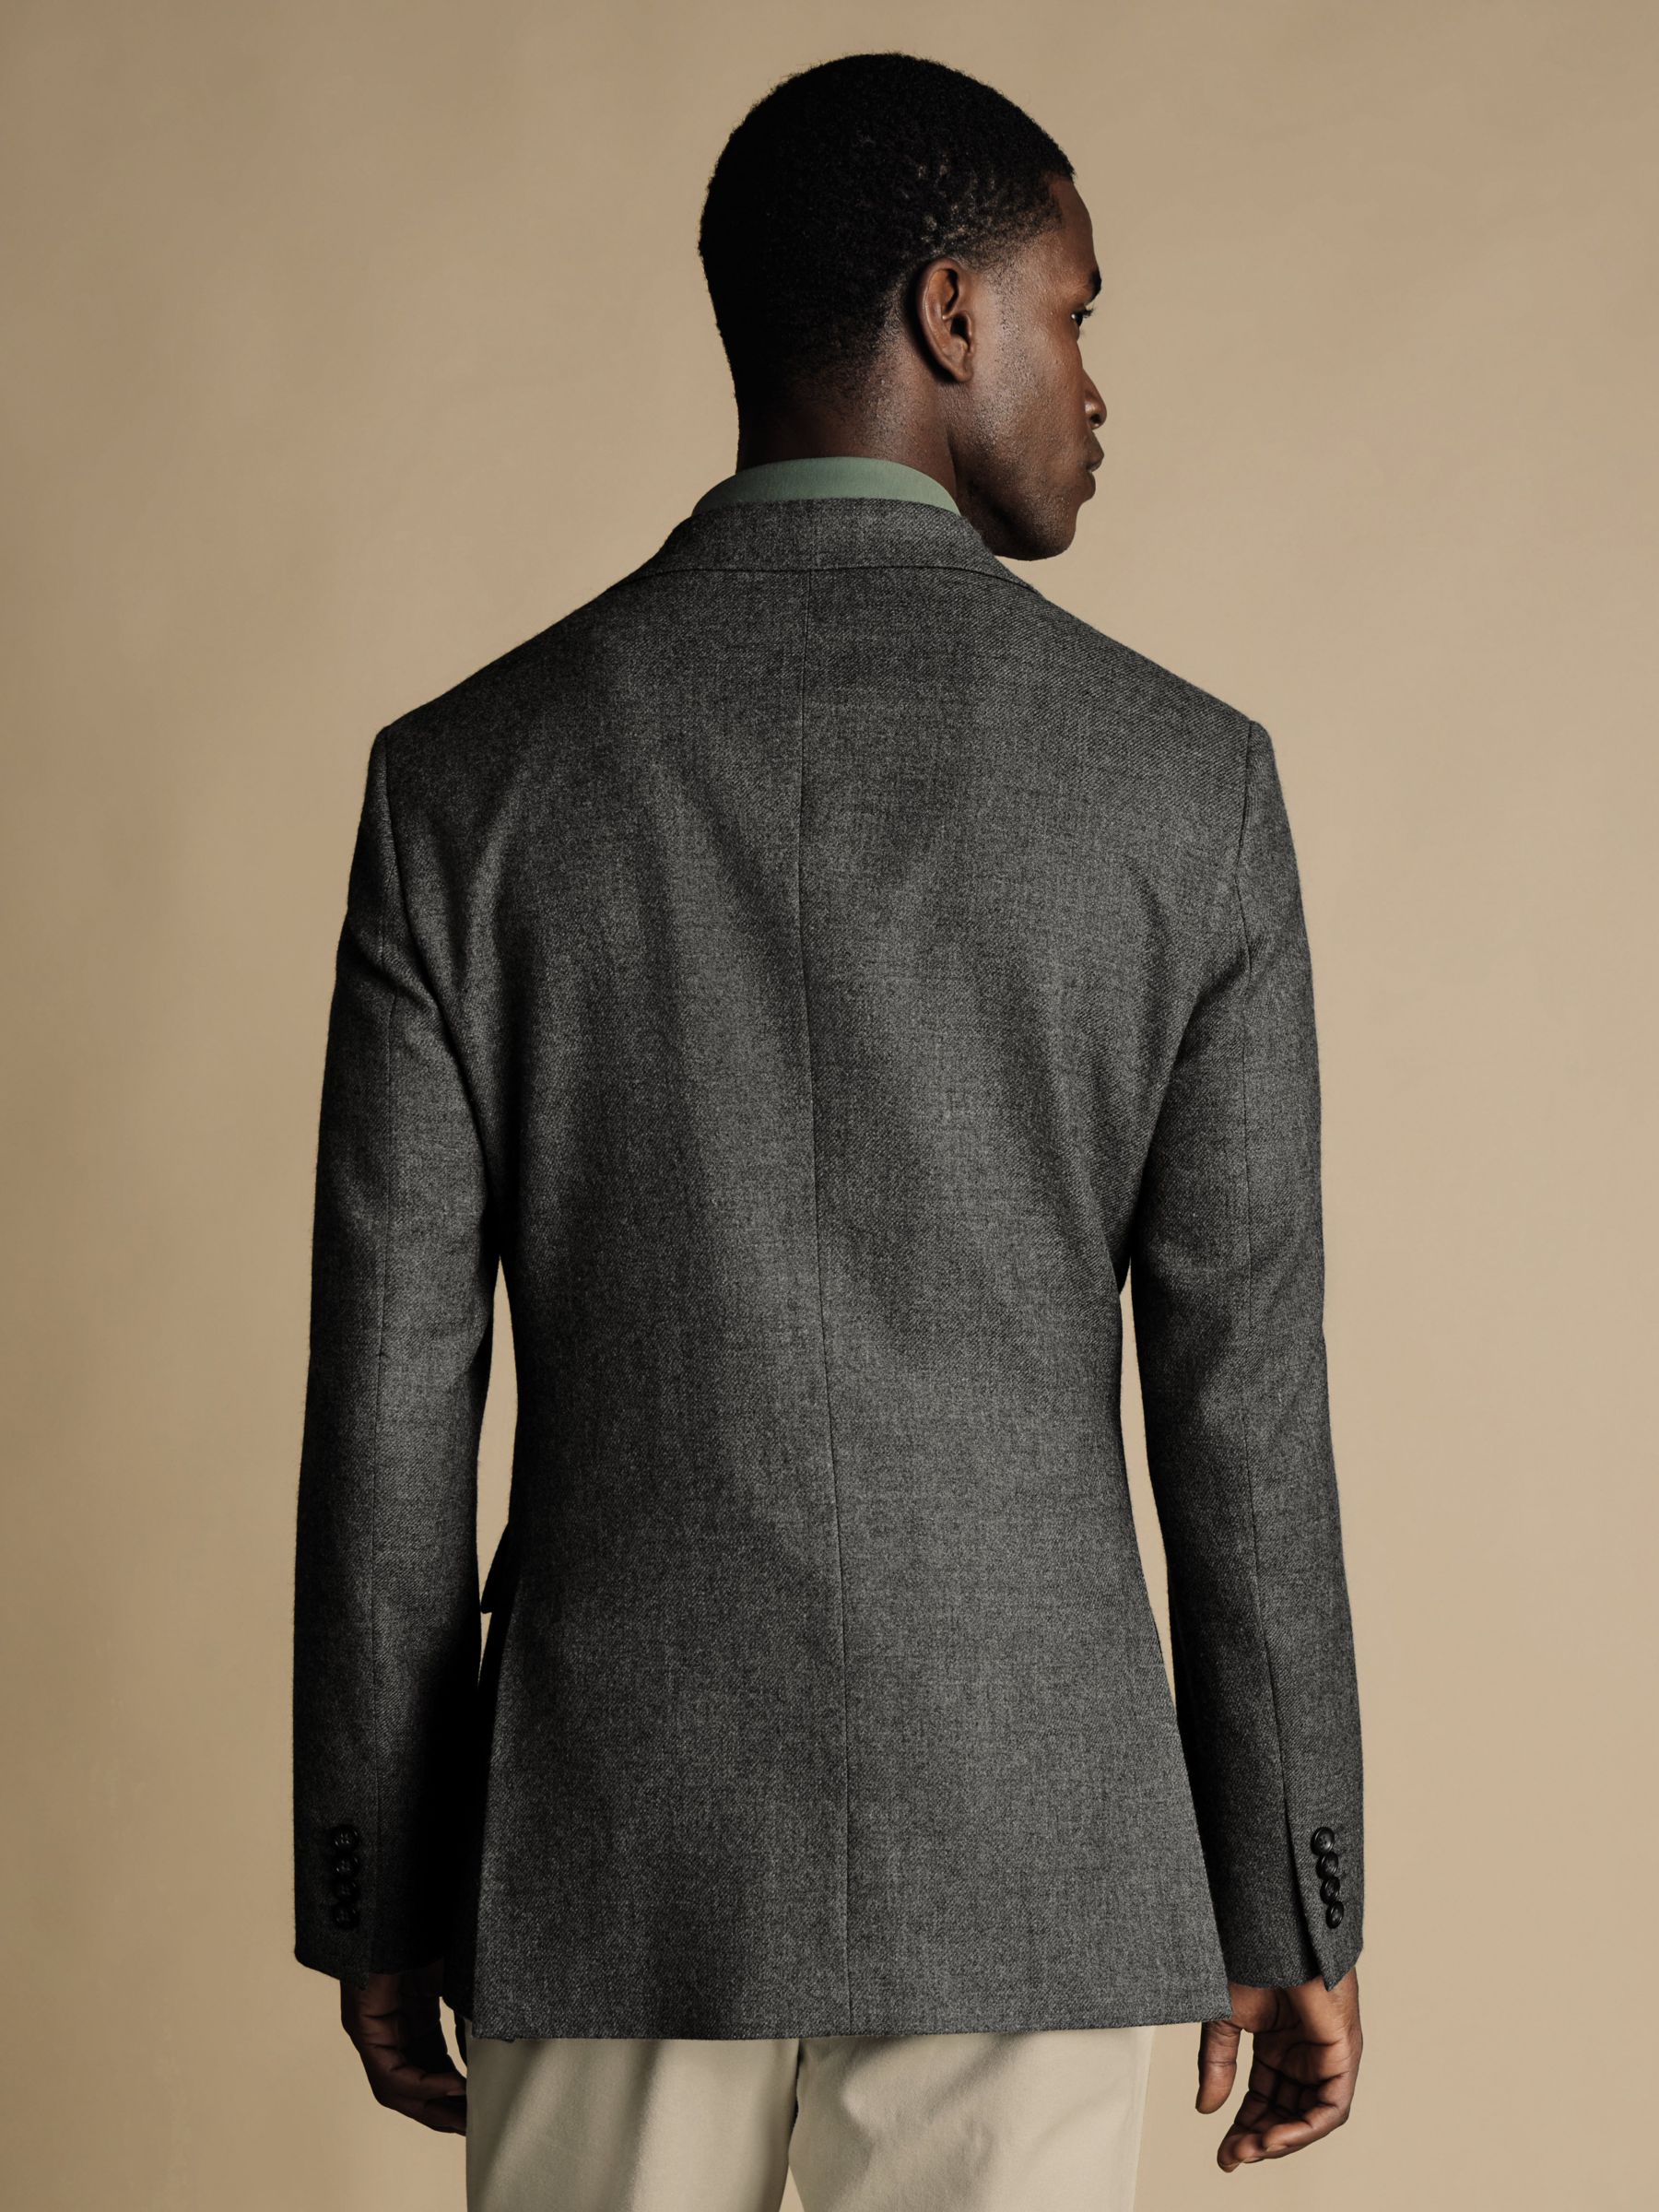 Charles Tyrwhitt Twill Wool Slim Fit Jacket, Grey, 36R